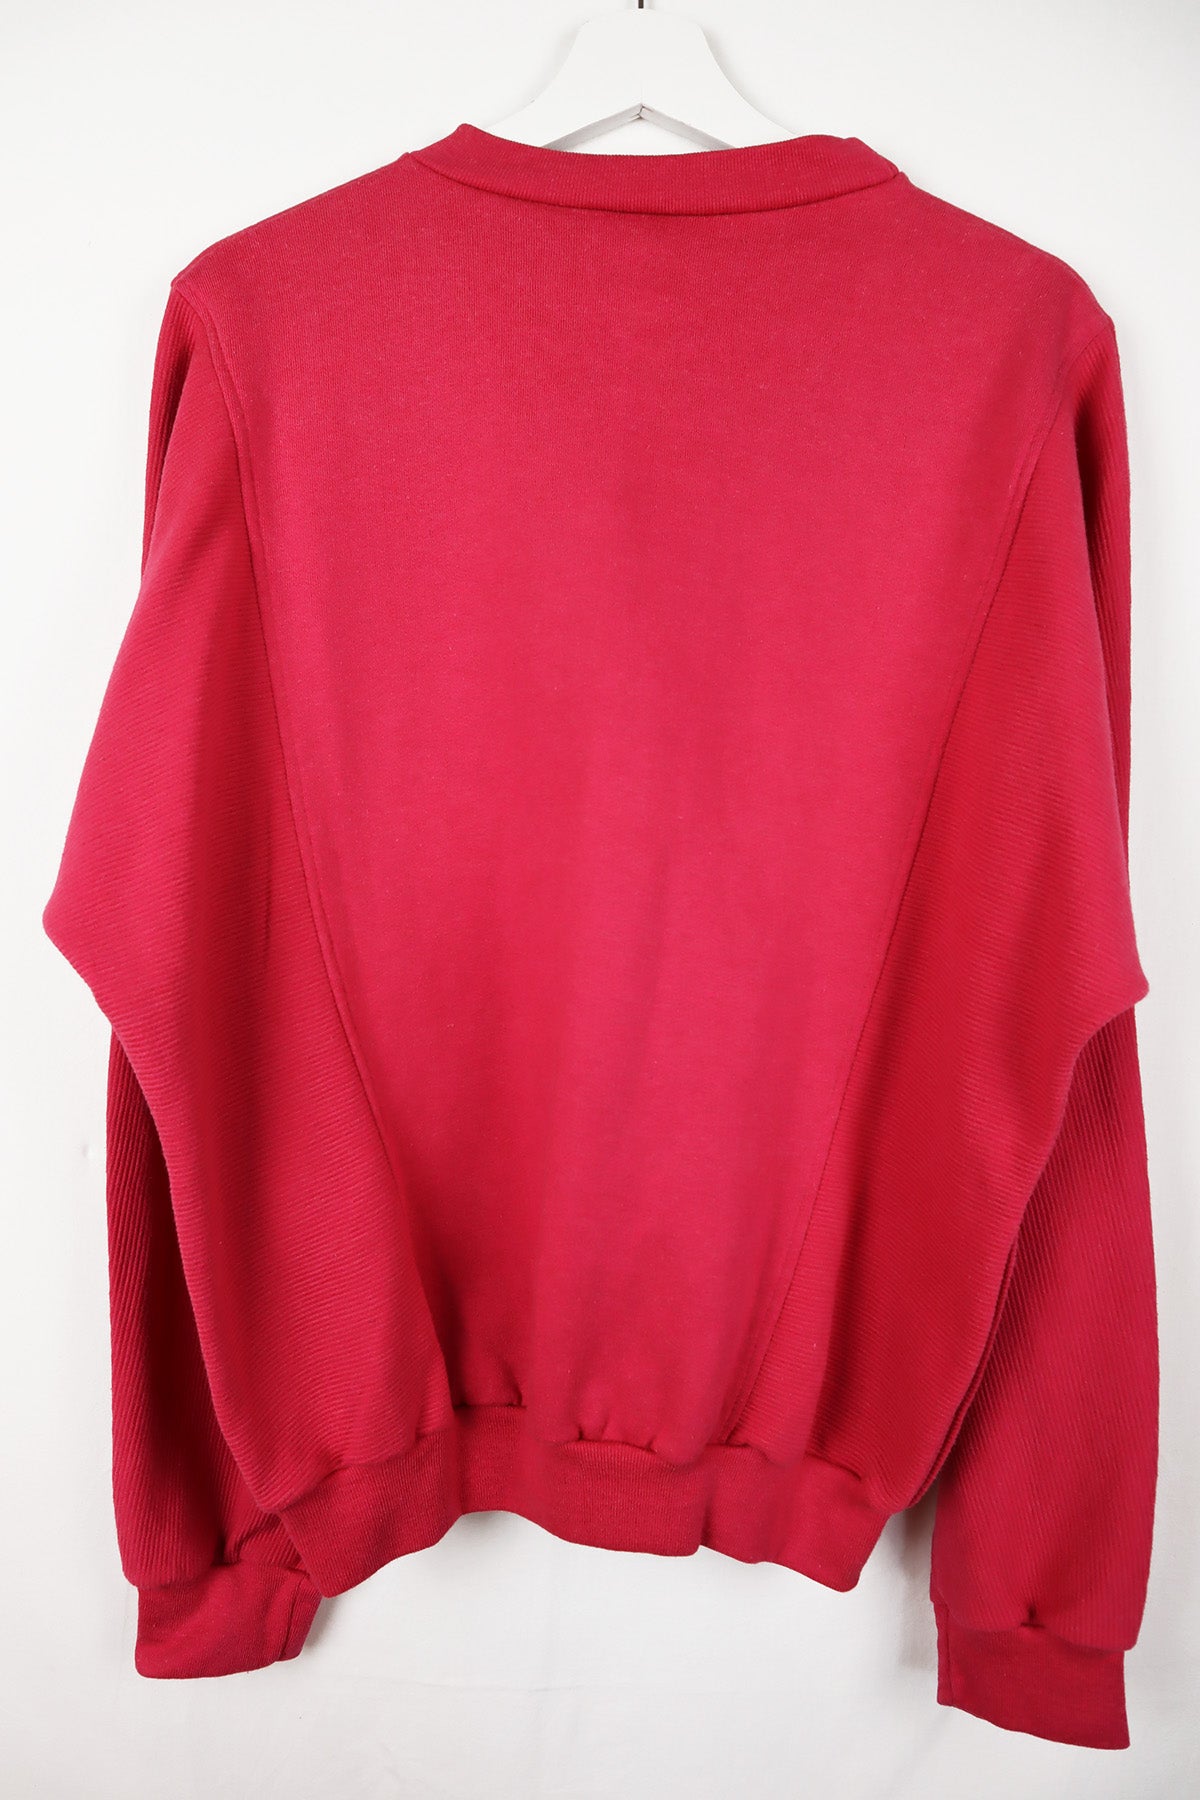 Sweater Vintage Himbeer Rot ( Gr. M )